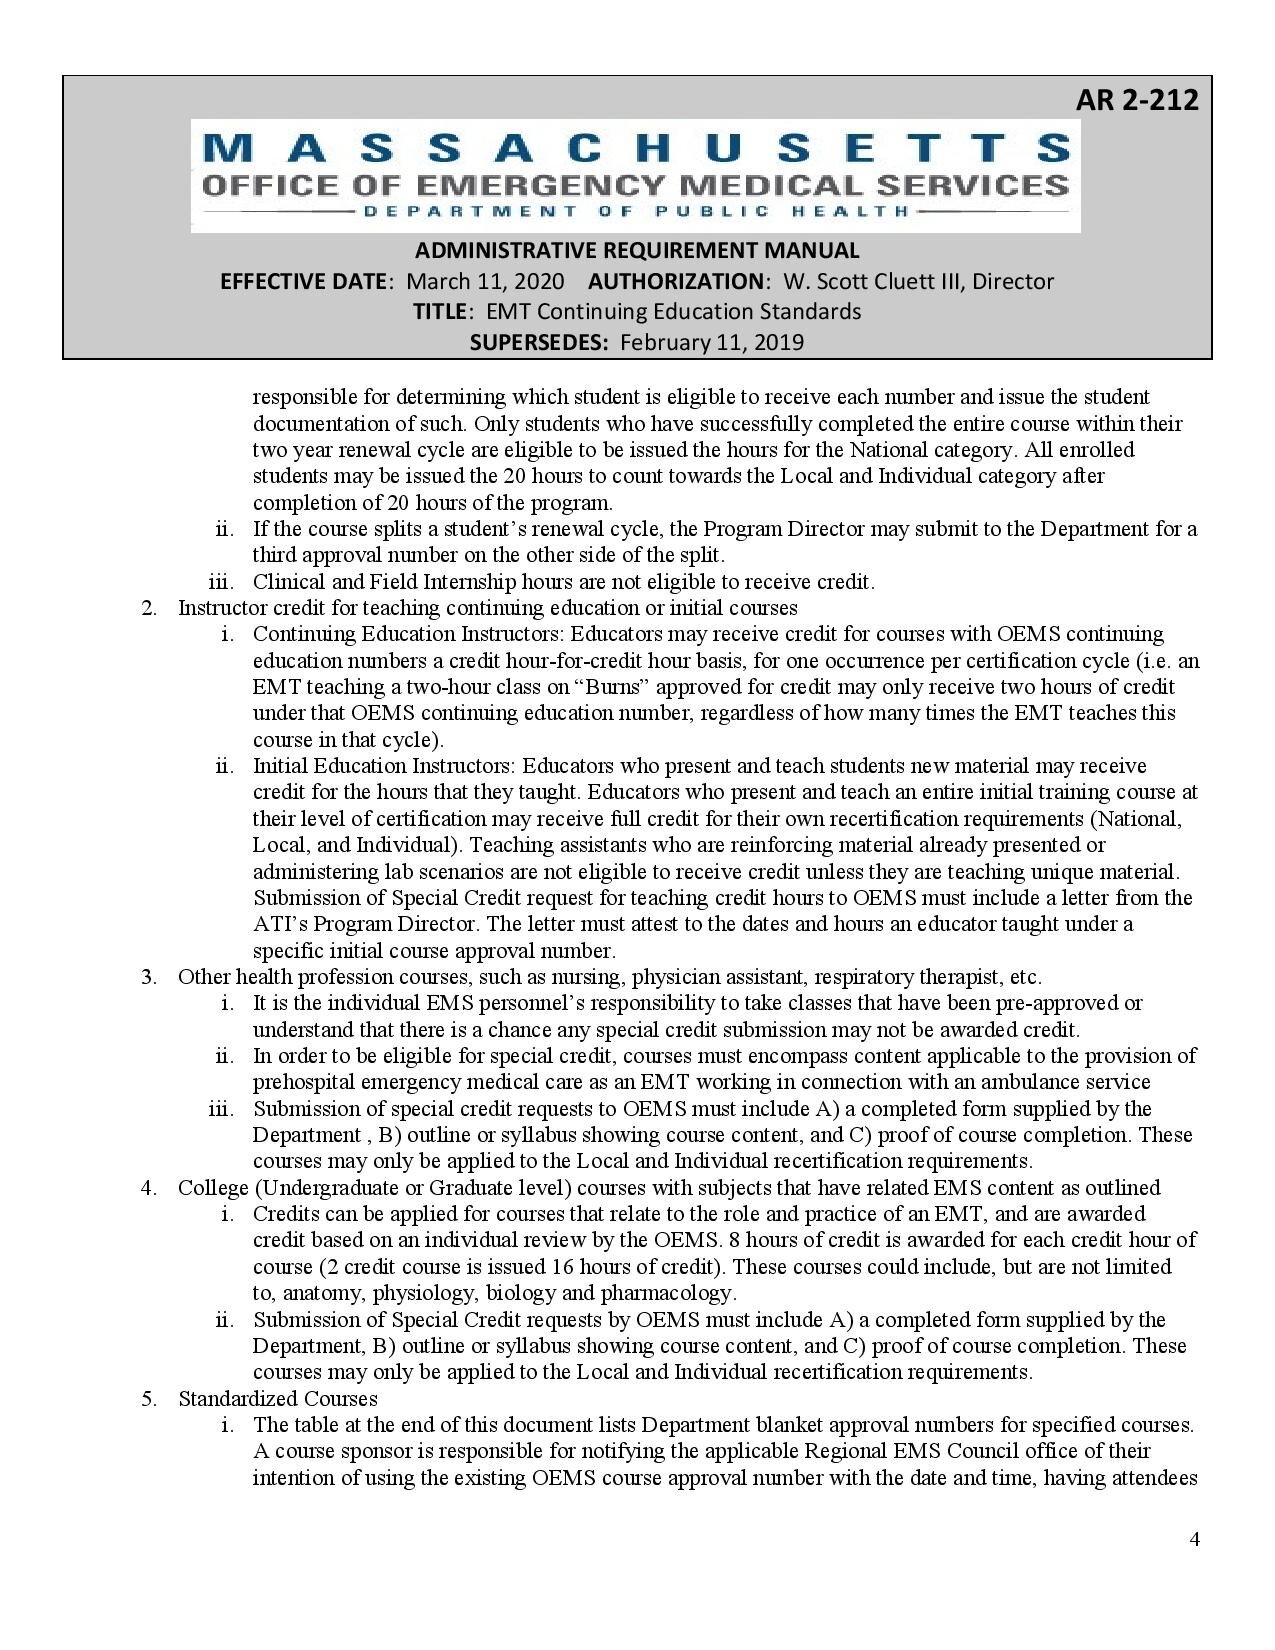 ar-2-212-emt-continuing-education-standards 31120-page-004.jpg